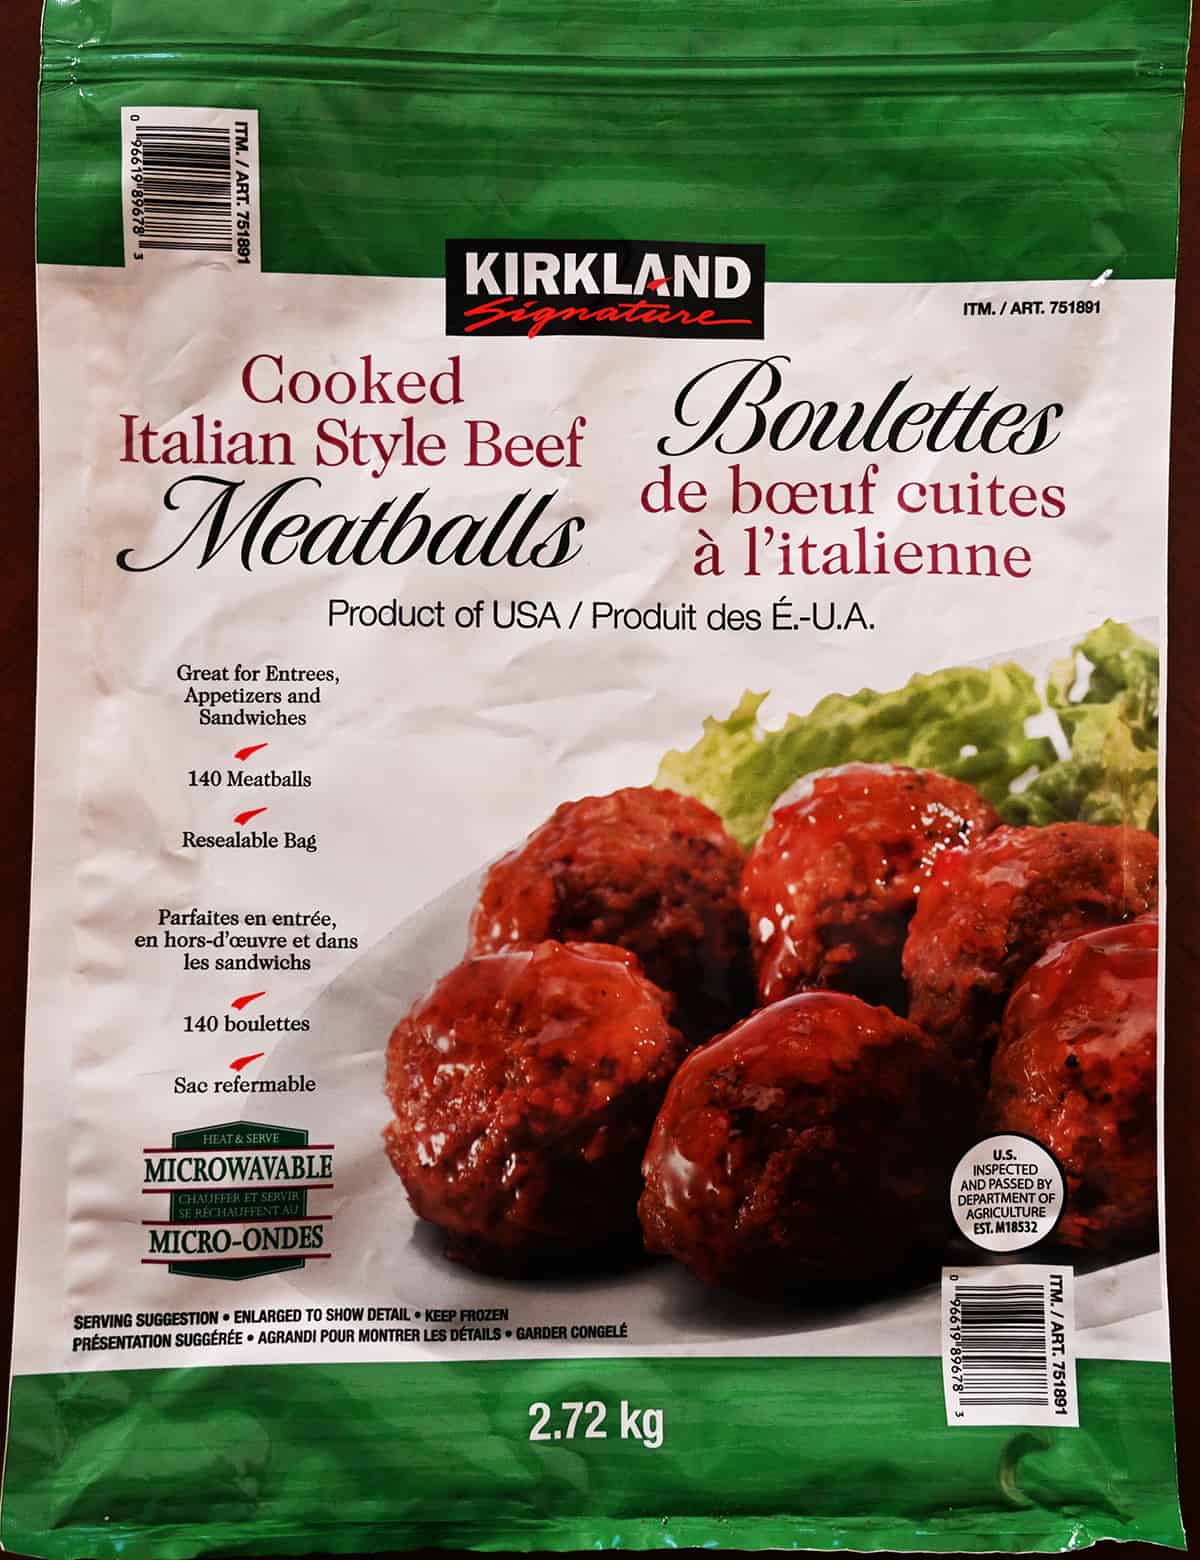 Closeup image of the bag of Kirkland Signature Italian Style Beef Meatballs.